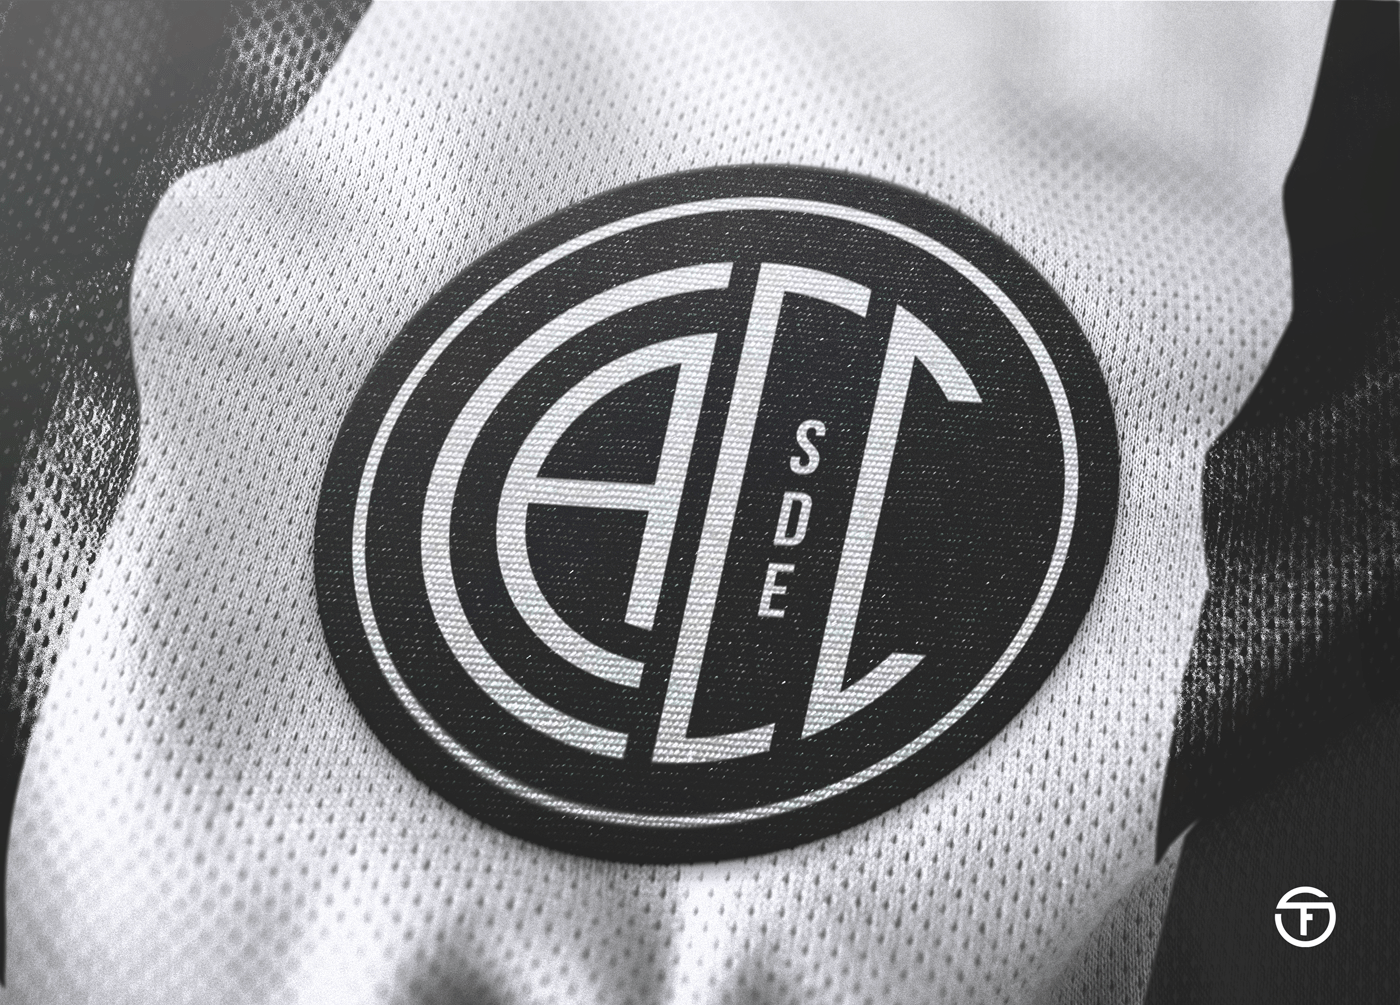 Argentinian Brannding crest Crests emblem emblems football logo logos soccer